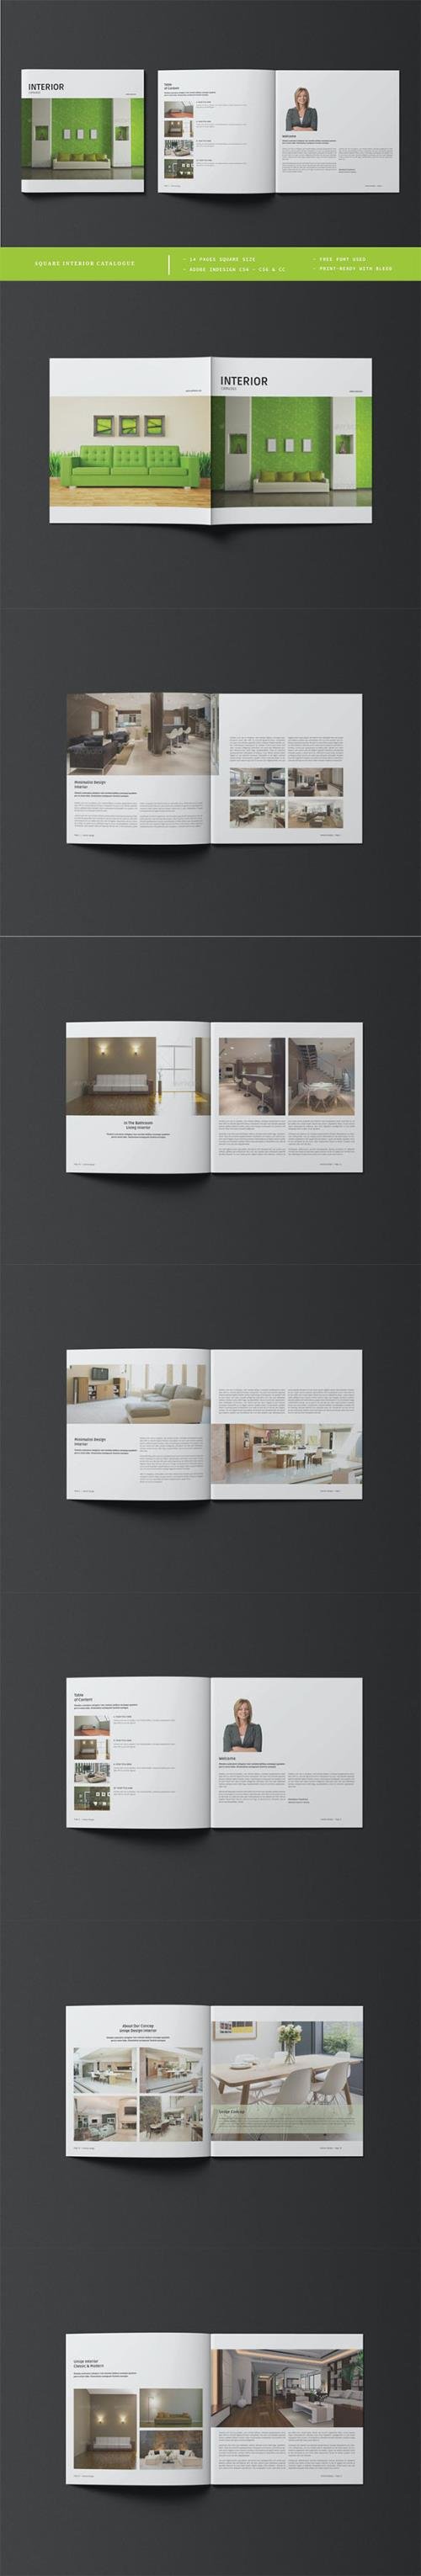 Square Interior Catalogue / Brochure